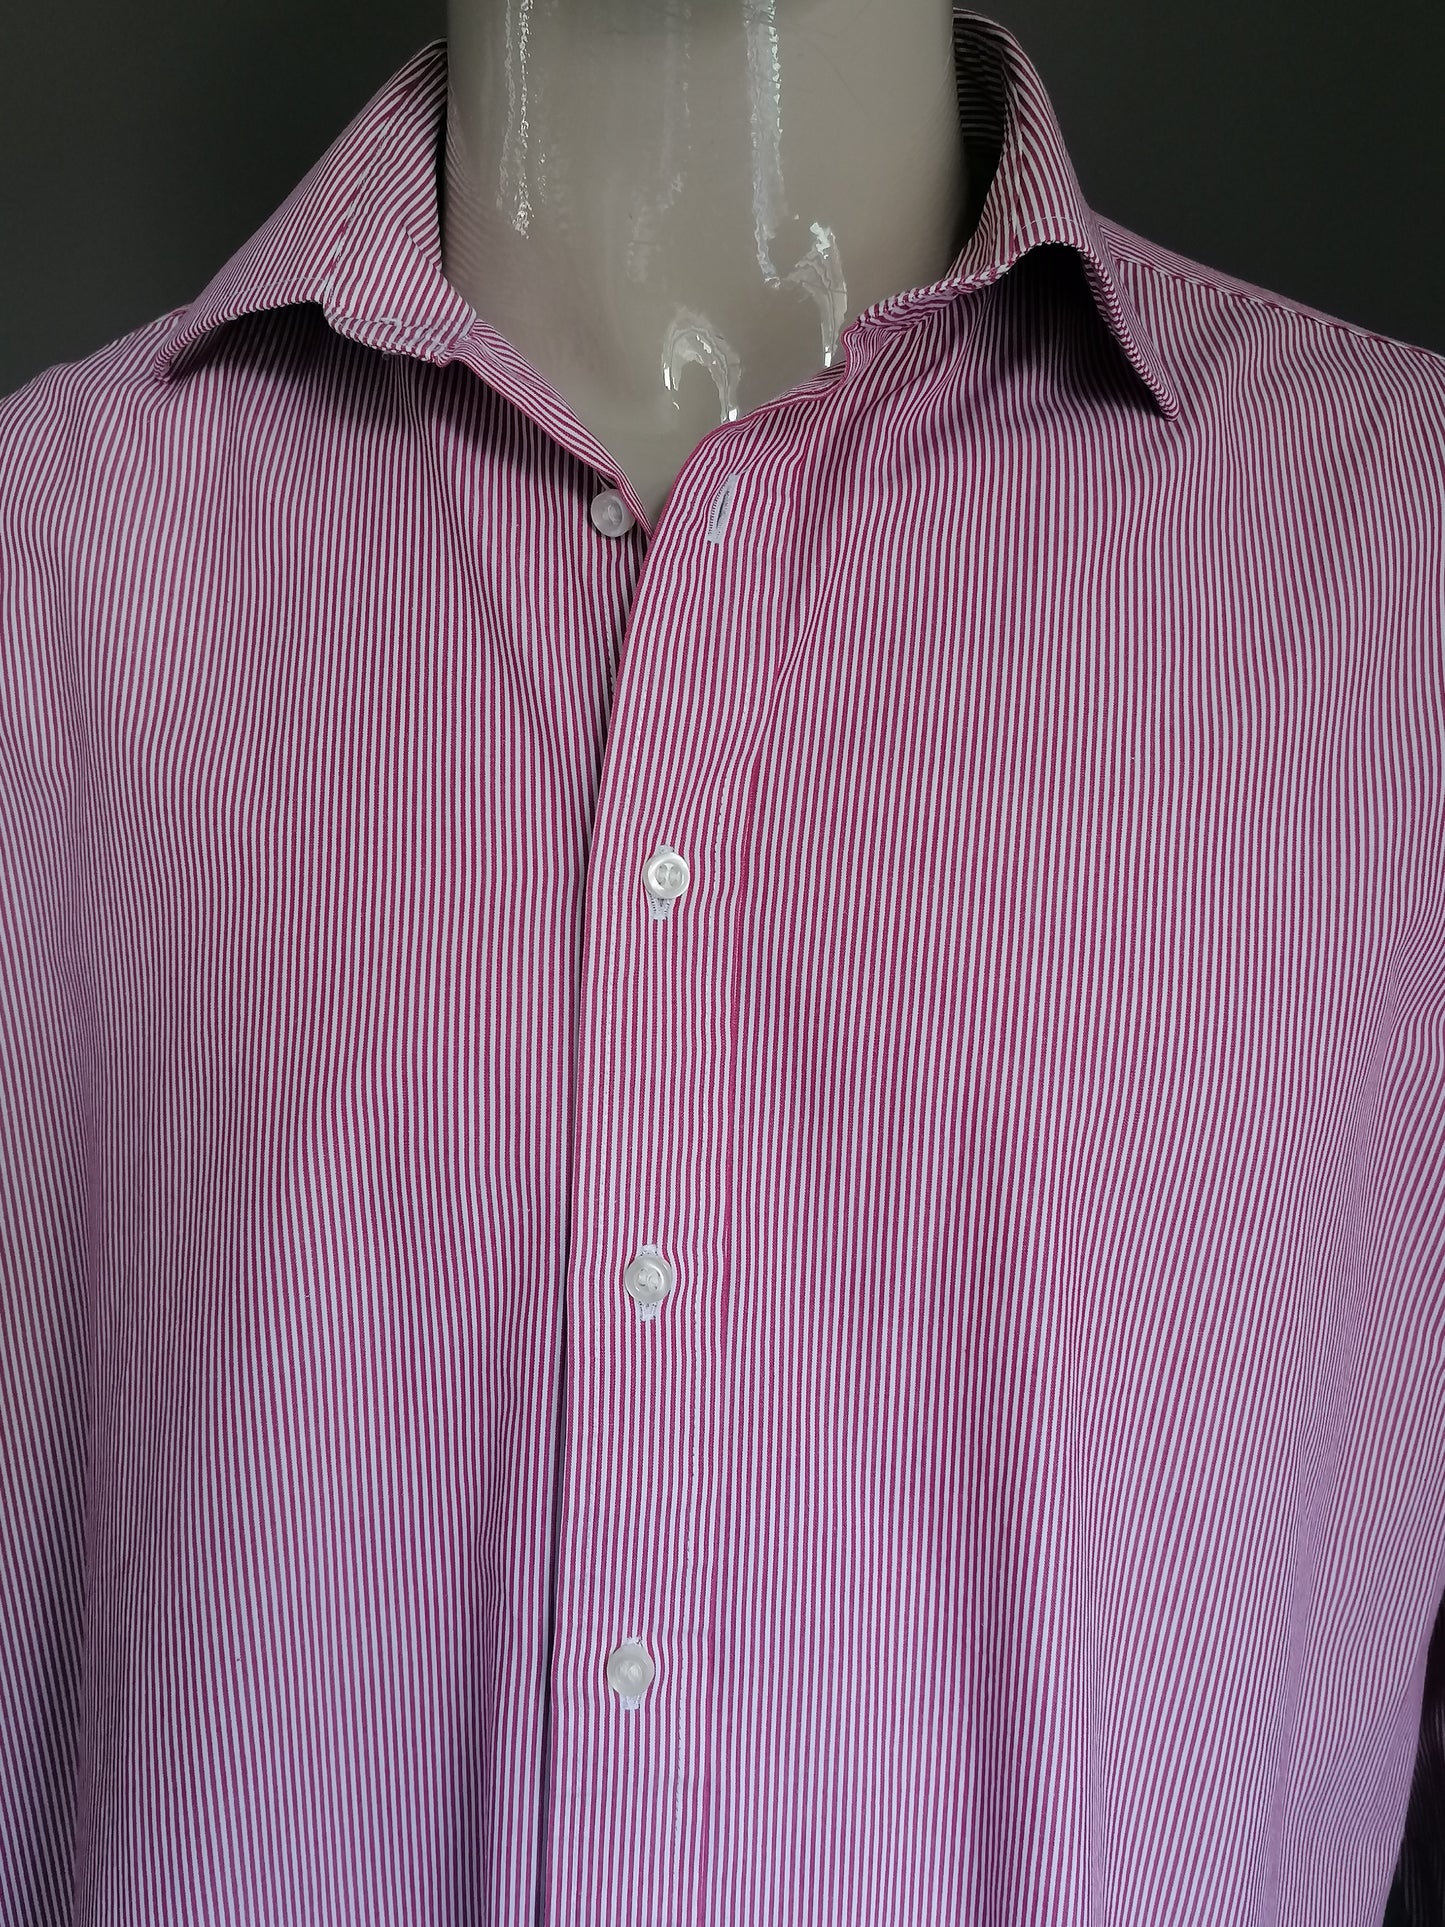 Lipman & Sons shirt. Red white striped. Size 45 / XXL / 2XL. Type of cuff knot. "Two Fold Yarn".